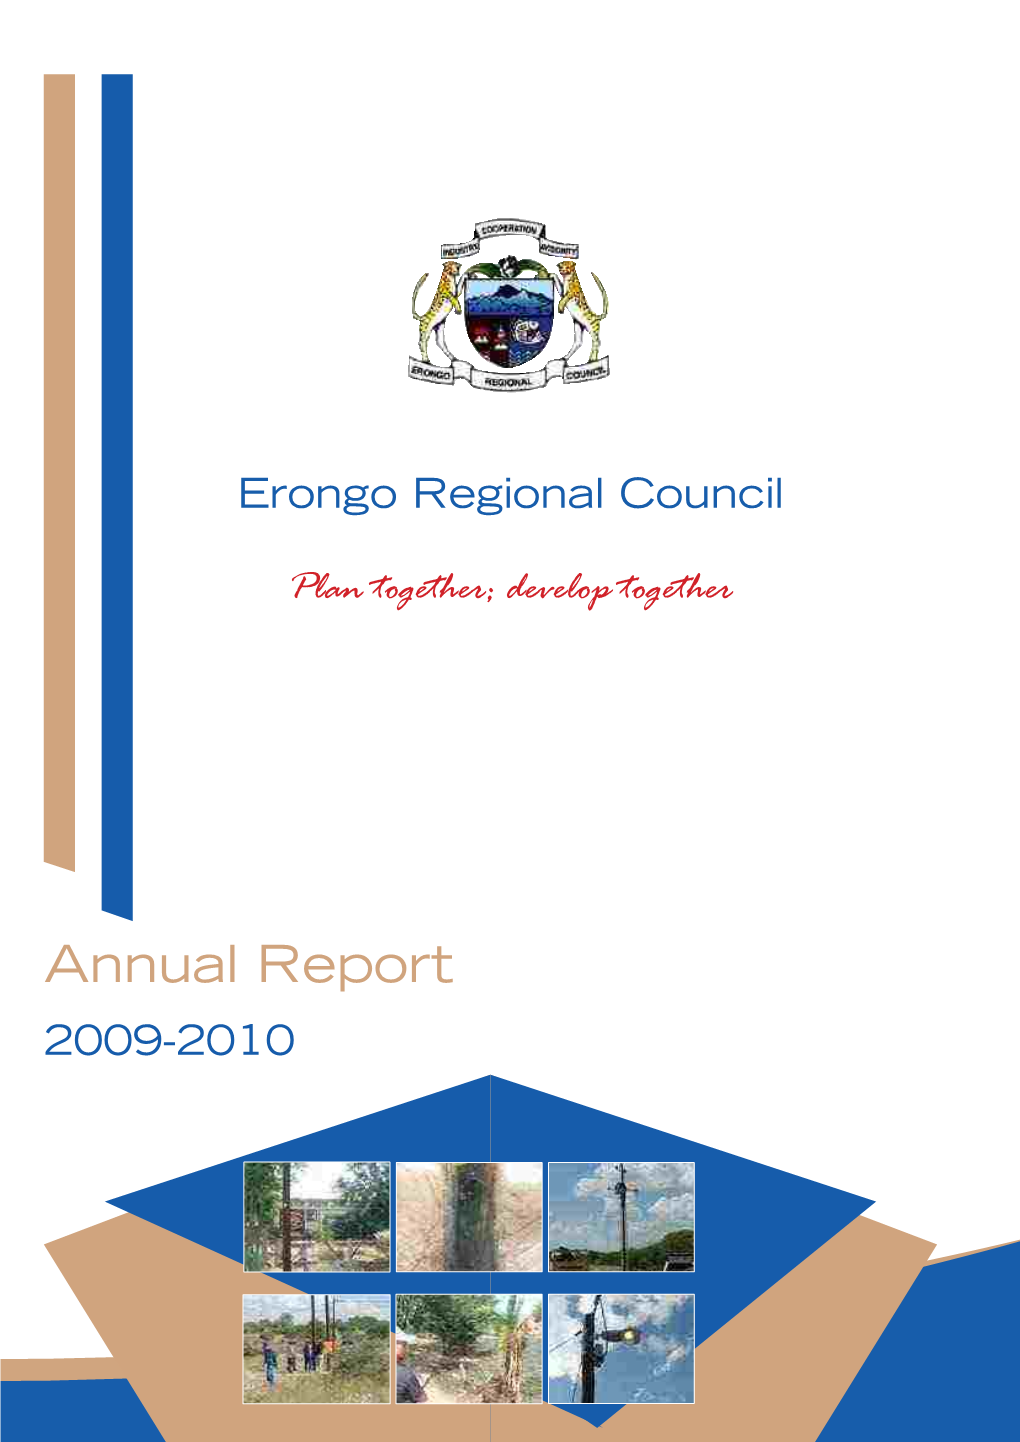 ERC Annual Report 2009/10